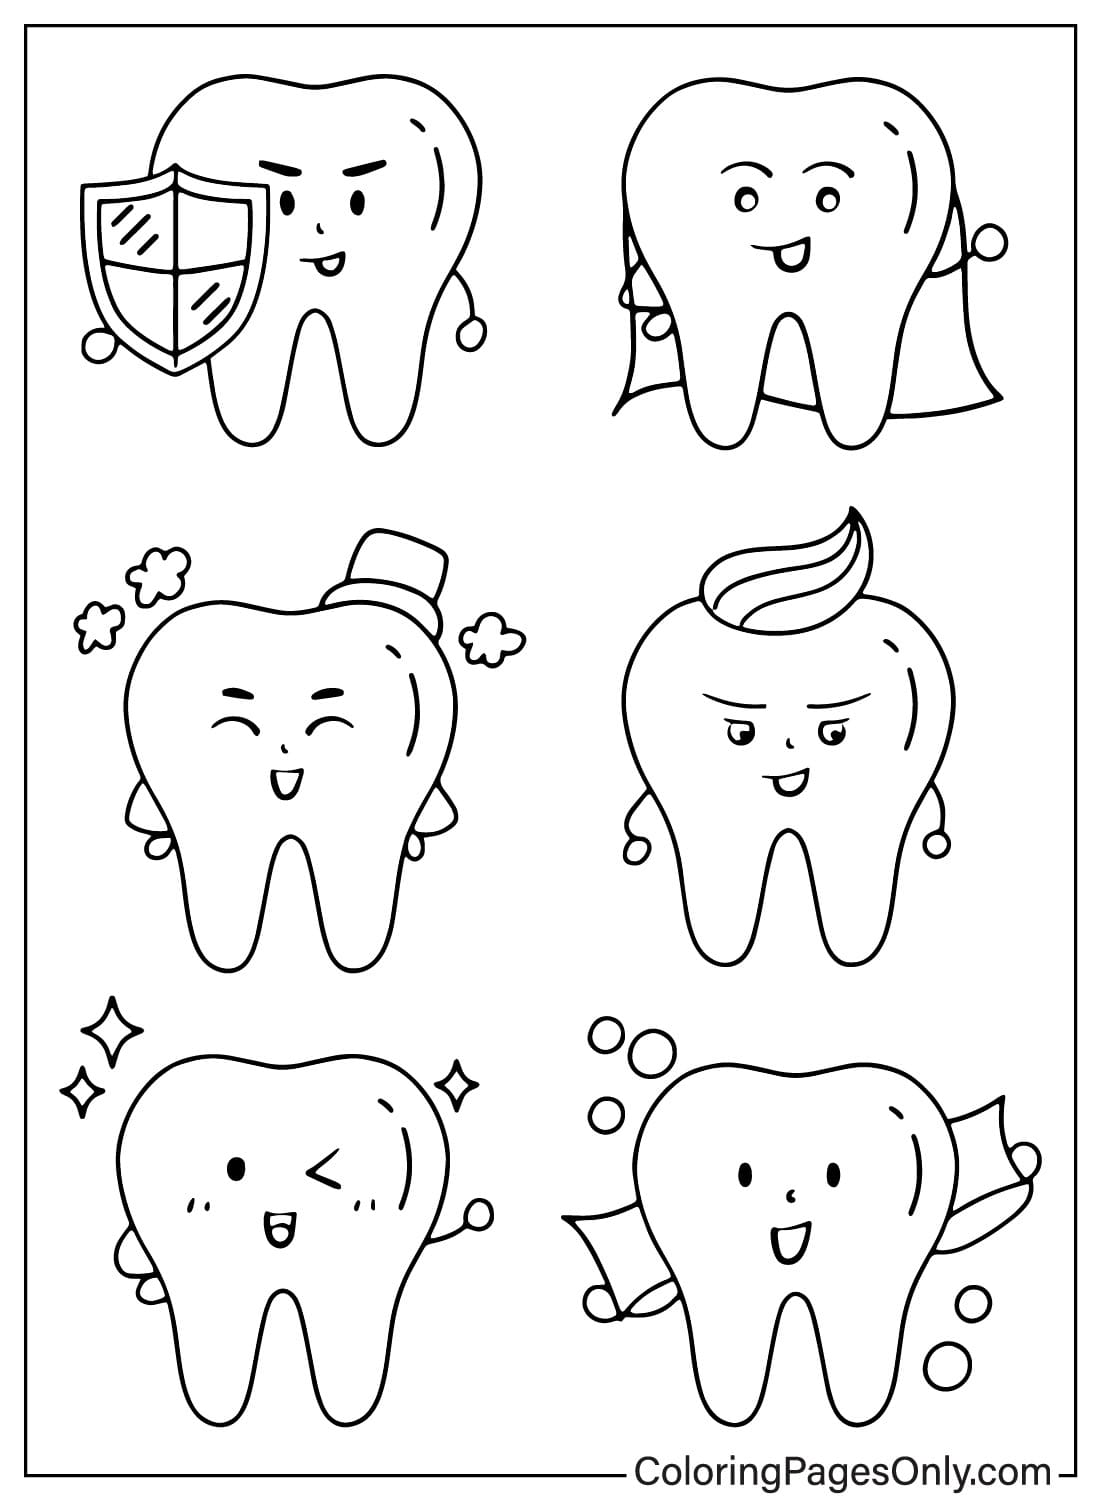 Tand printbare kleurplaat van Tooth